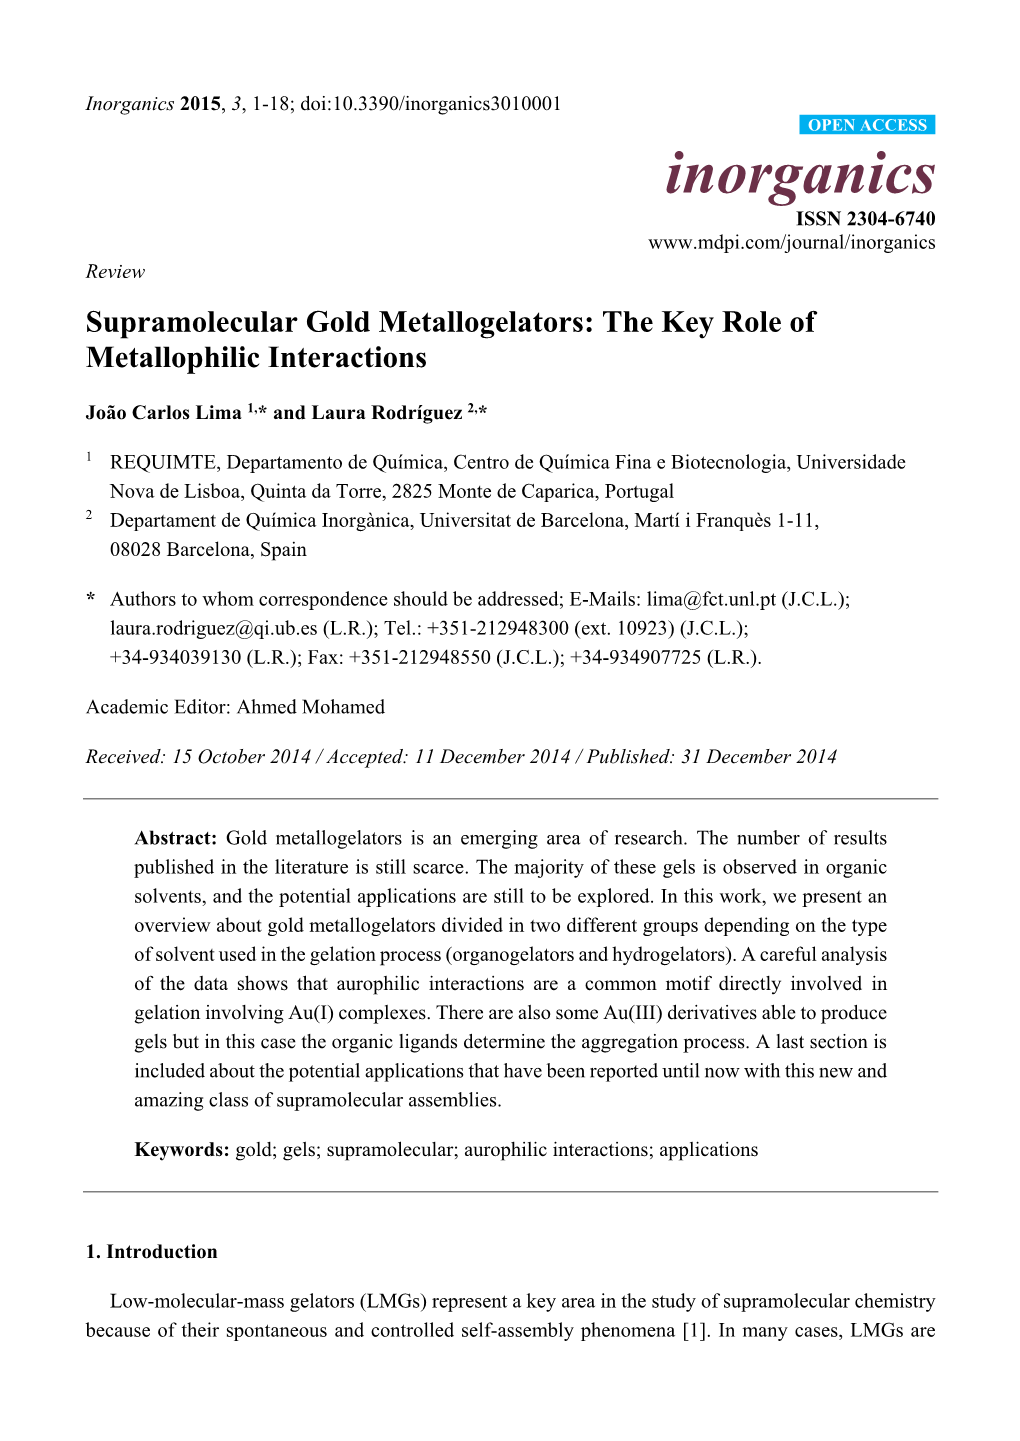 Supramolecular Gold Metallogelators: the Key Role of Metallophilic Interactions